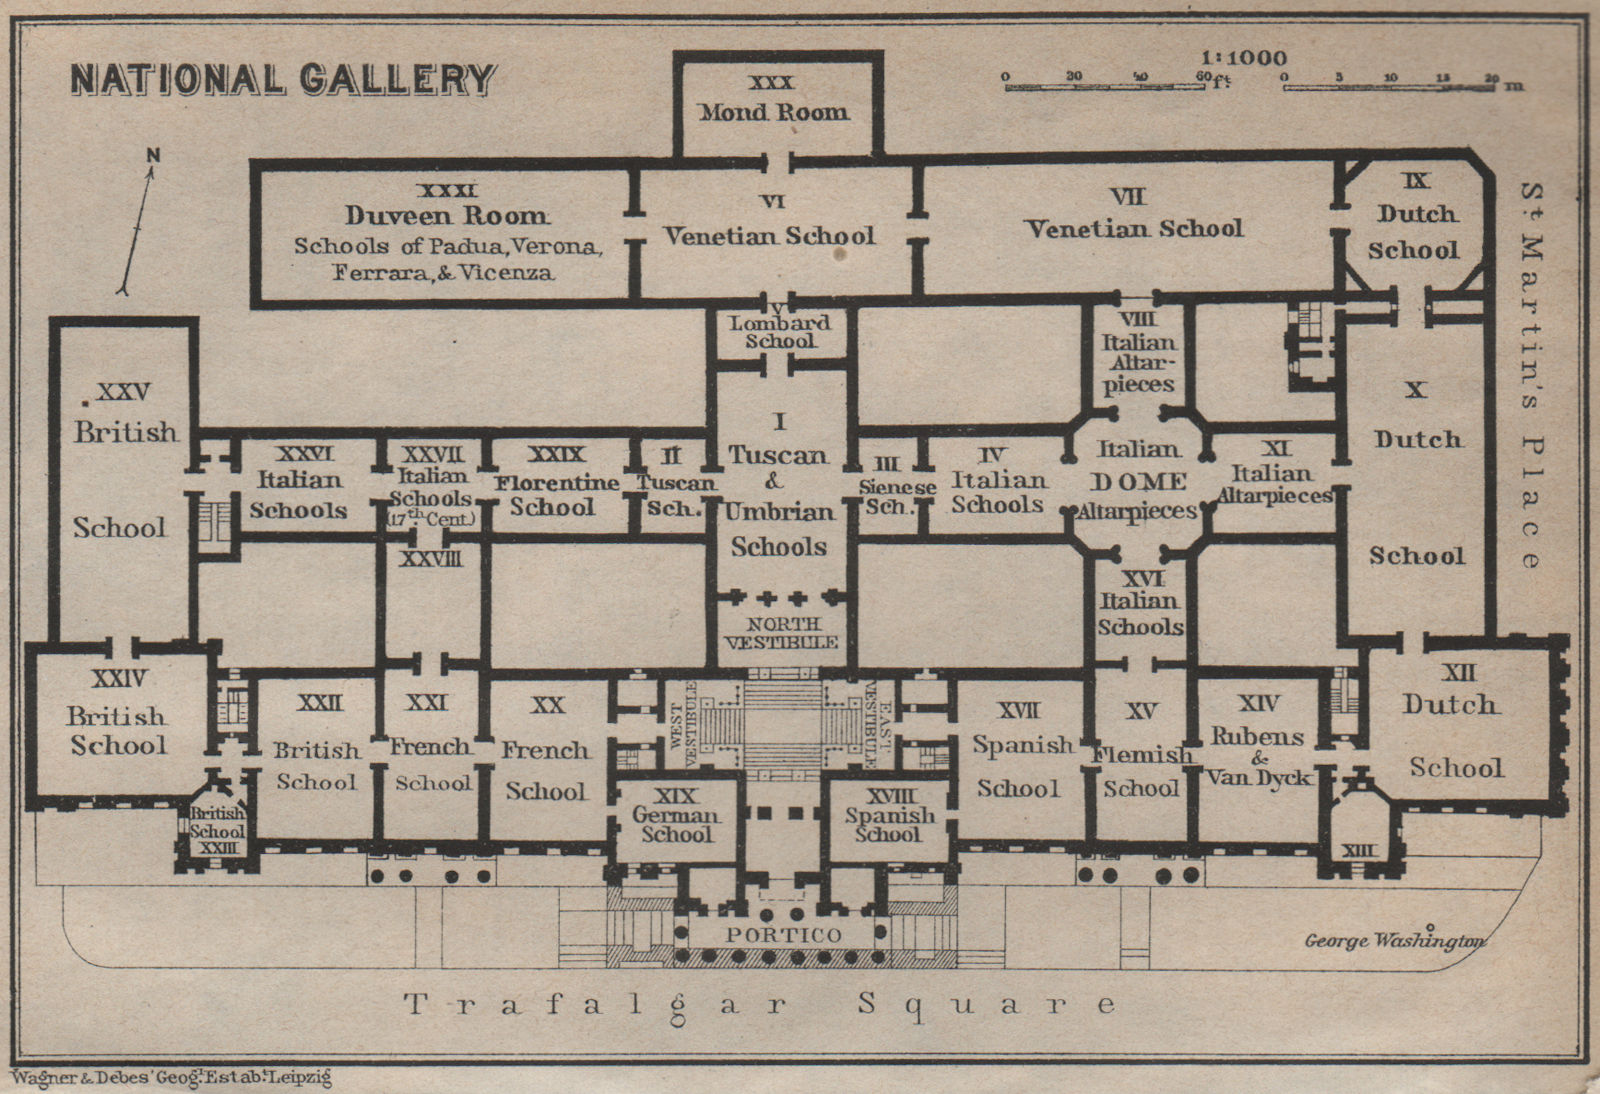 Associate Product THE NATIONAL GALLERY floor plan. Trafalgar Square. London. BAEDEKER 1930 map